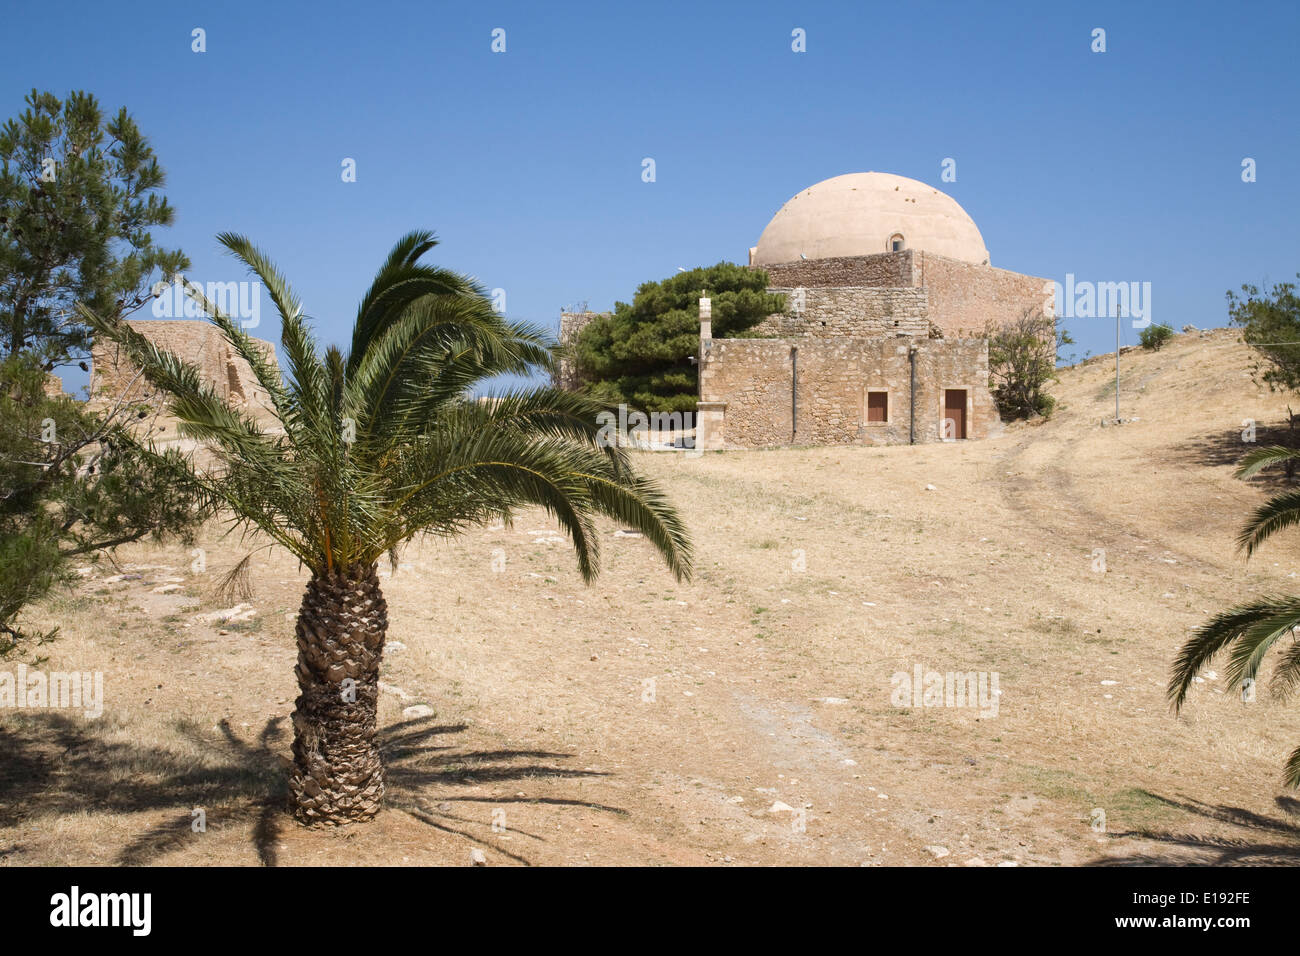 The church of Agia Ekaterini and mosque in the Fortezza, Rethymno, Crete. Stock Photo